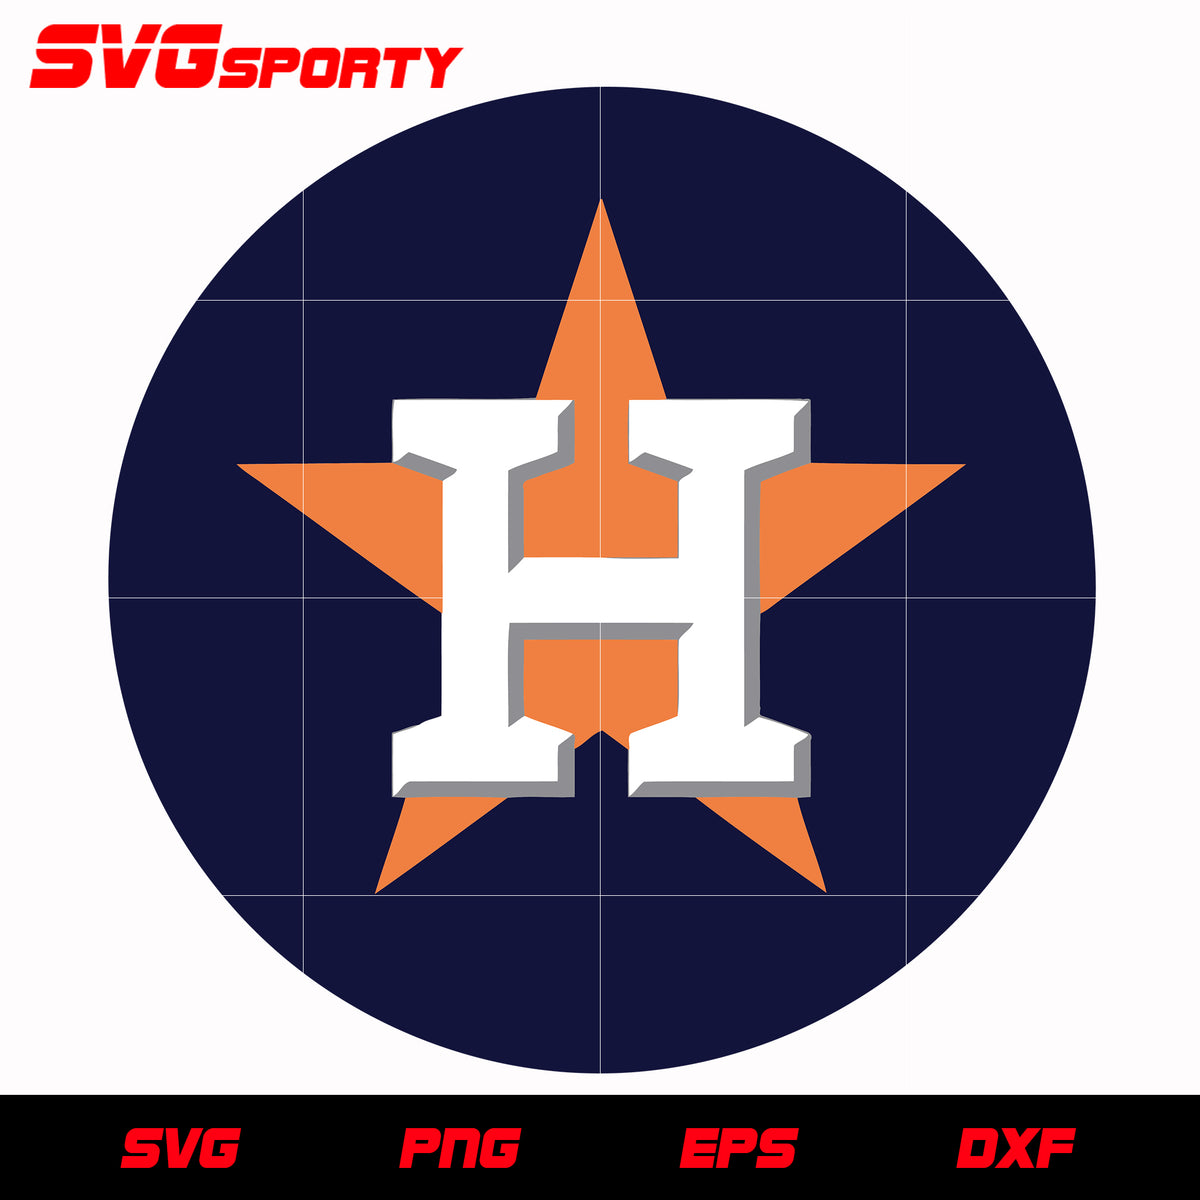 MLB Logo Houston Astros, Houston Astros SVG, Vector Houston Astros